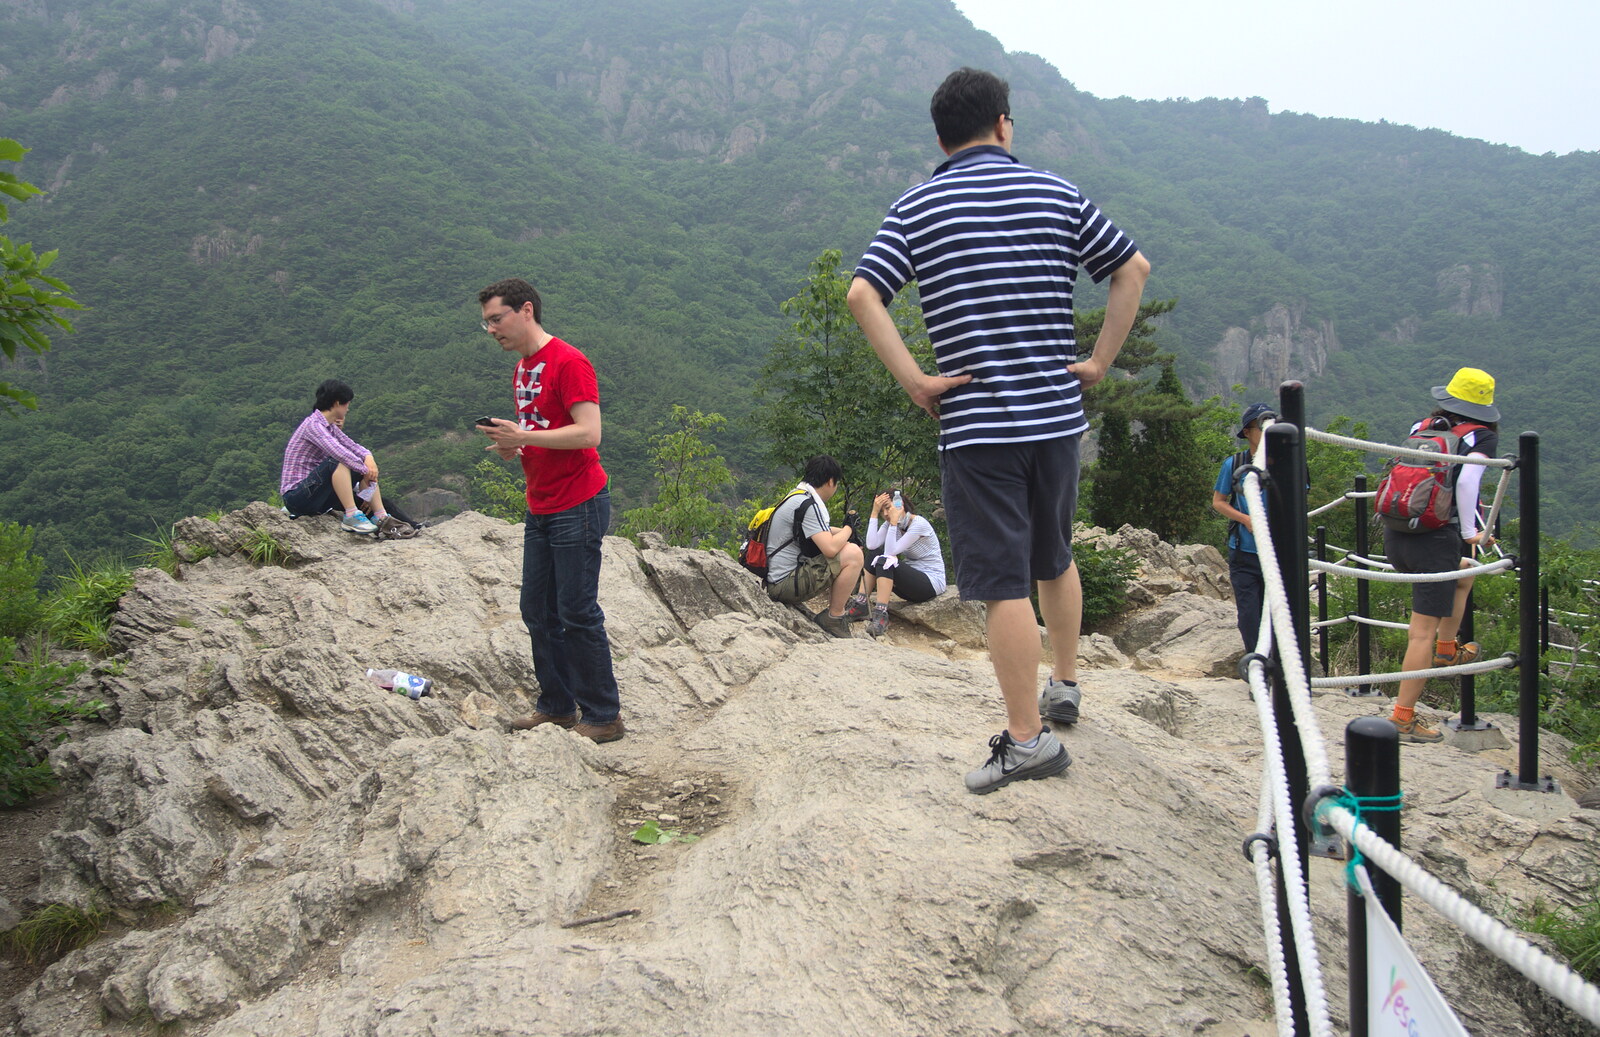 Chris and Hyosoo on a rock somewhere from Working at Samsung, and Geumosan Mountain, Gumi, Gyeongsangbuk-do, Korea - 24th June 2012